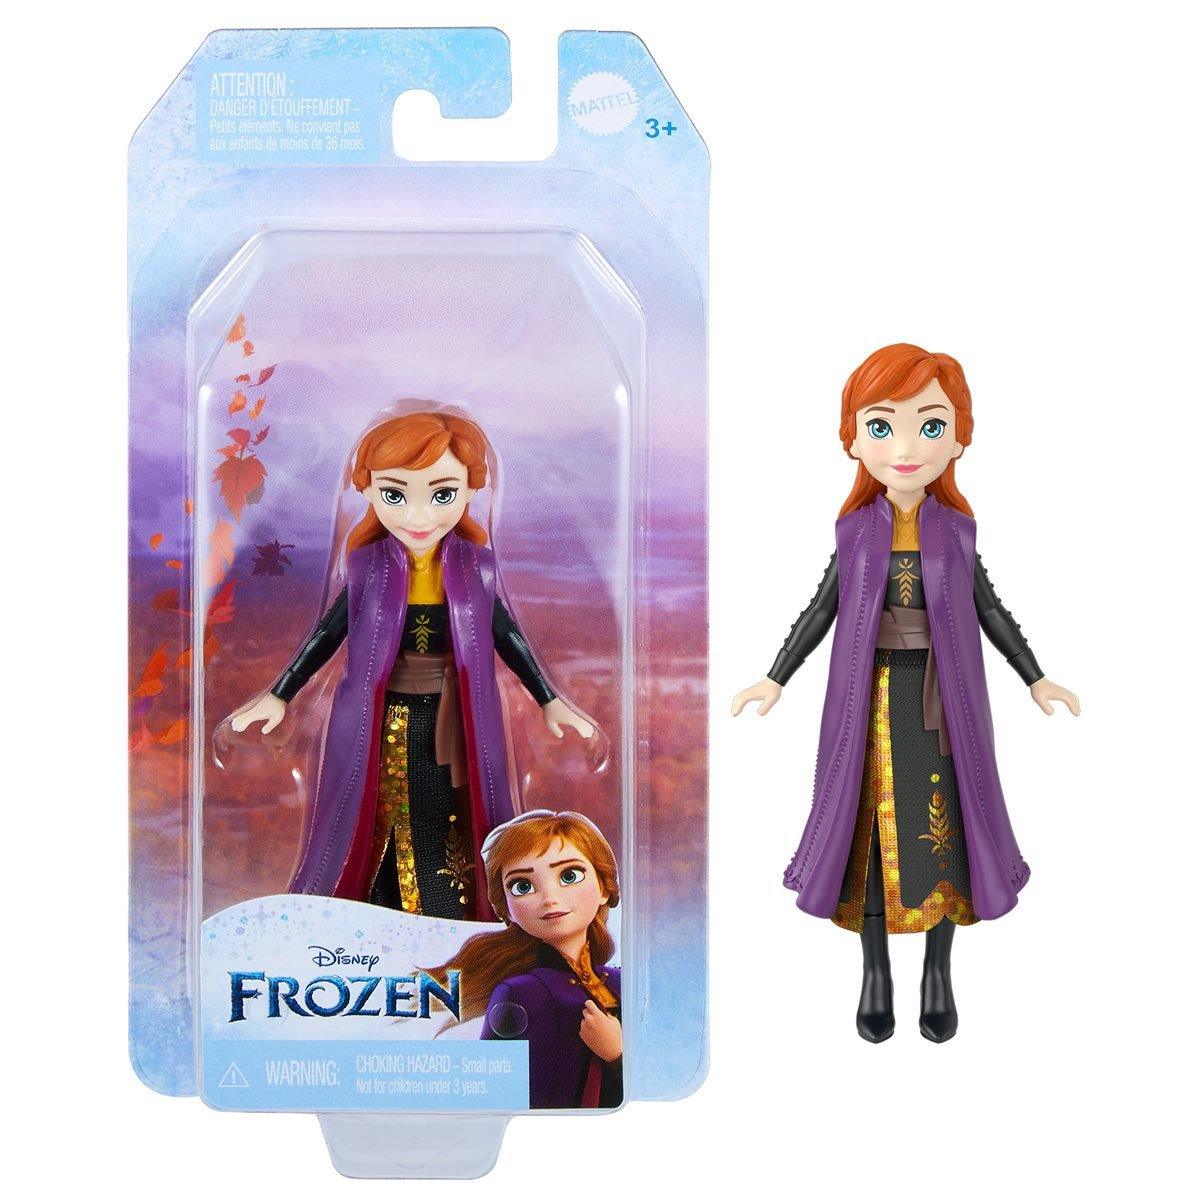 Disney Frozen 2 Toys Anna Small Doll - BumbleToys - 5-7 Years, Boys, Disney Princess, dup-review-publication, Fashion Dolls & Accessories, Girls, Mattel, Pre-Order